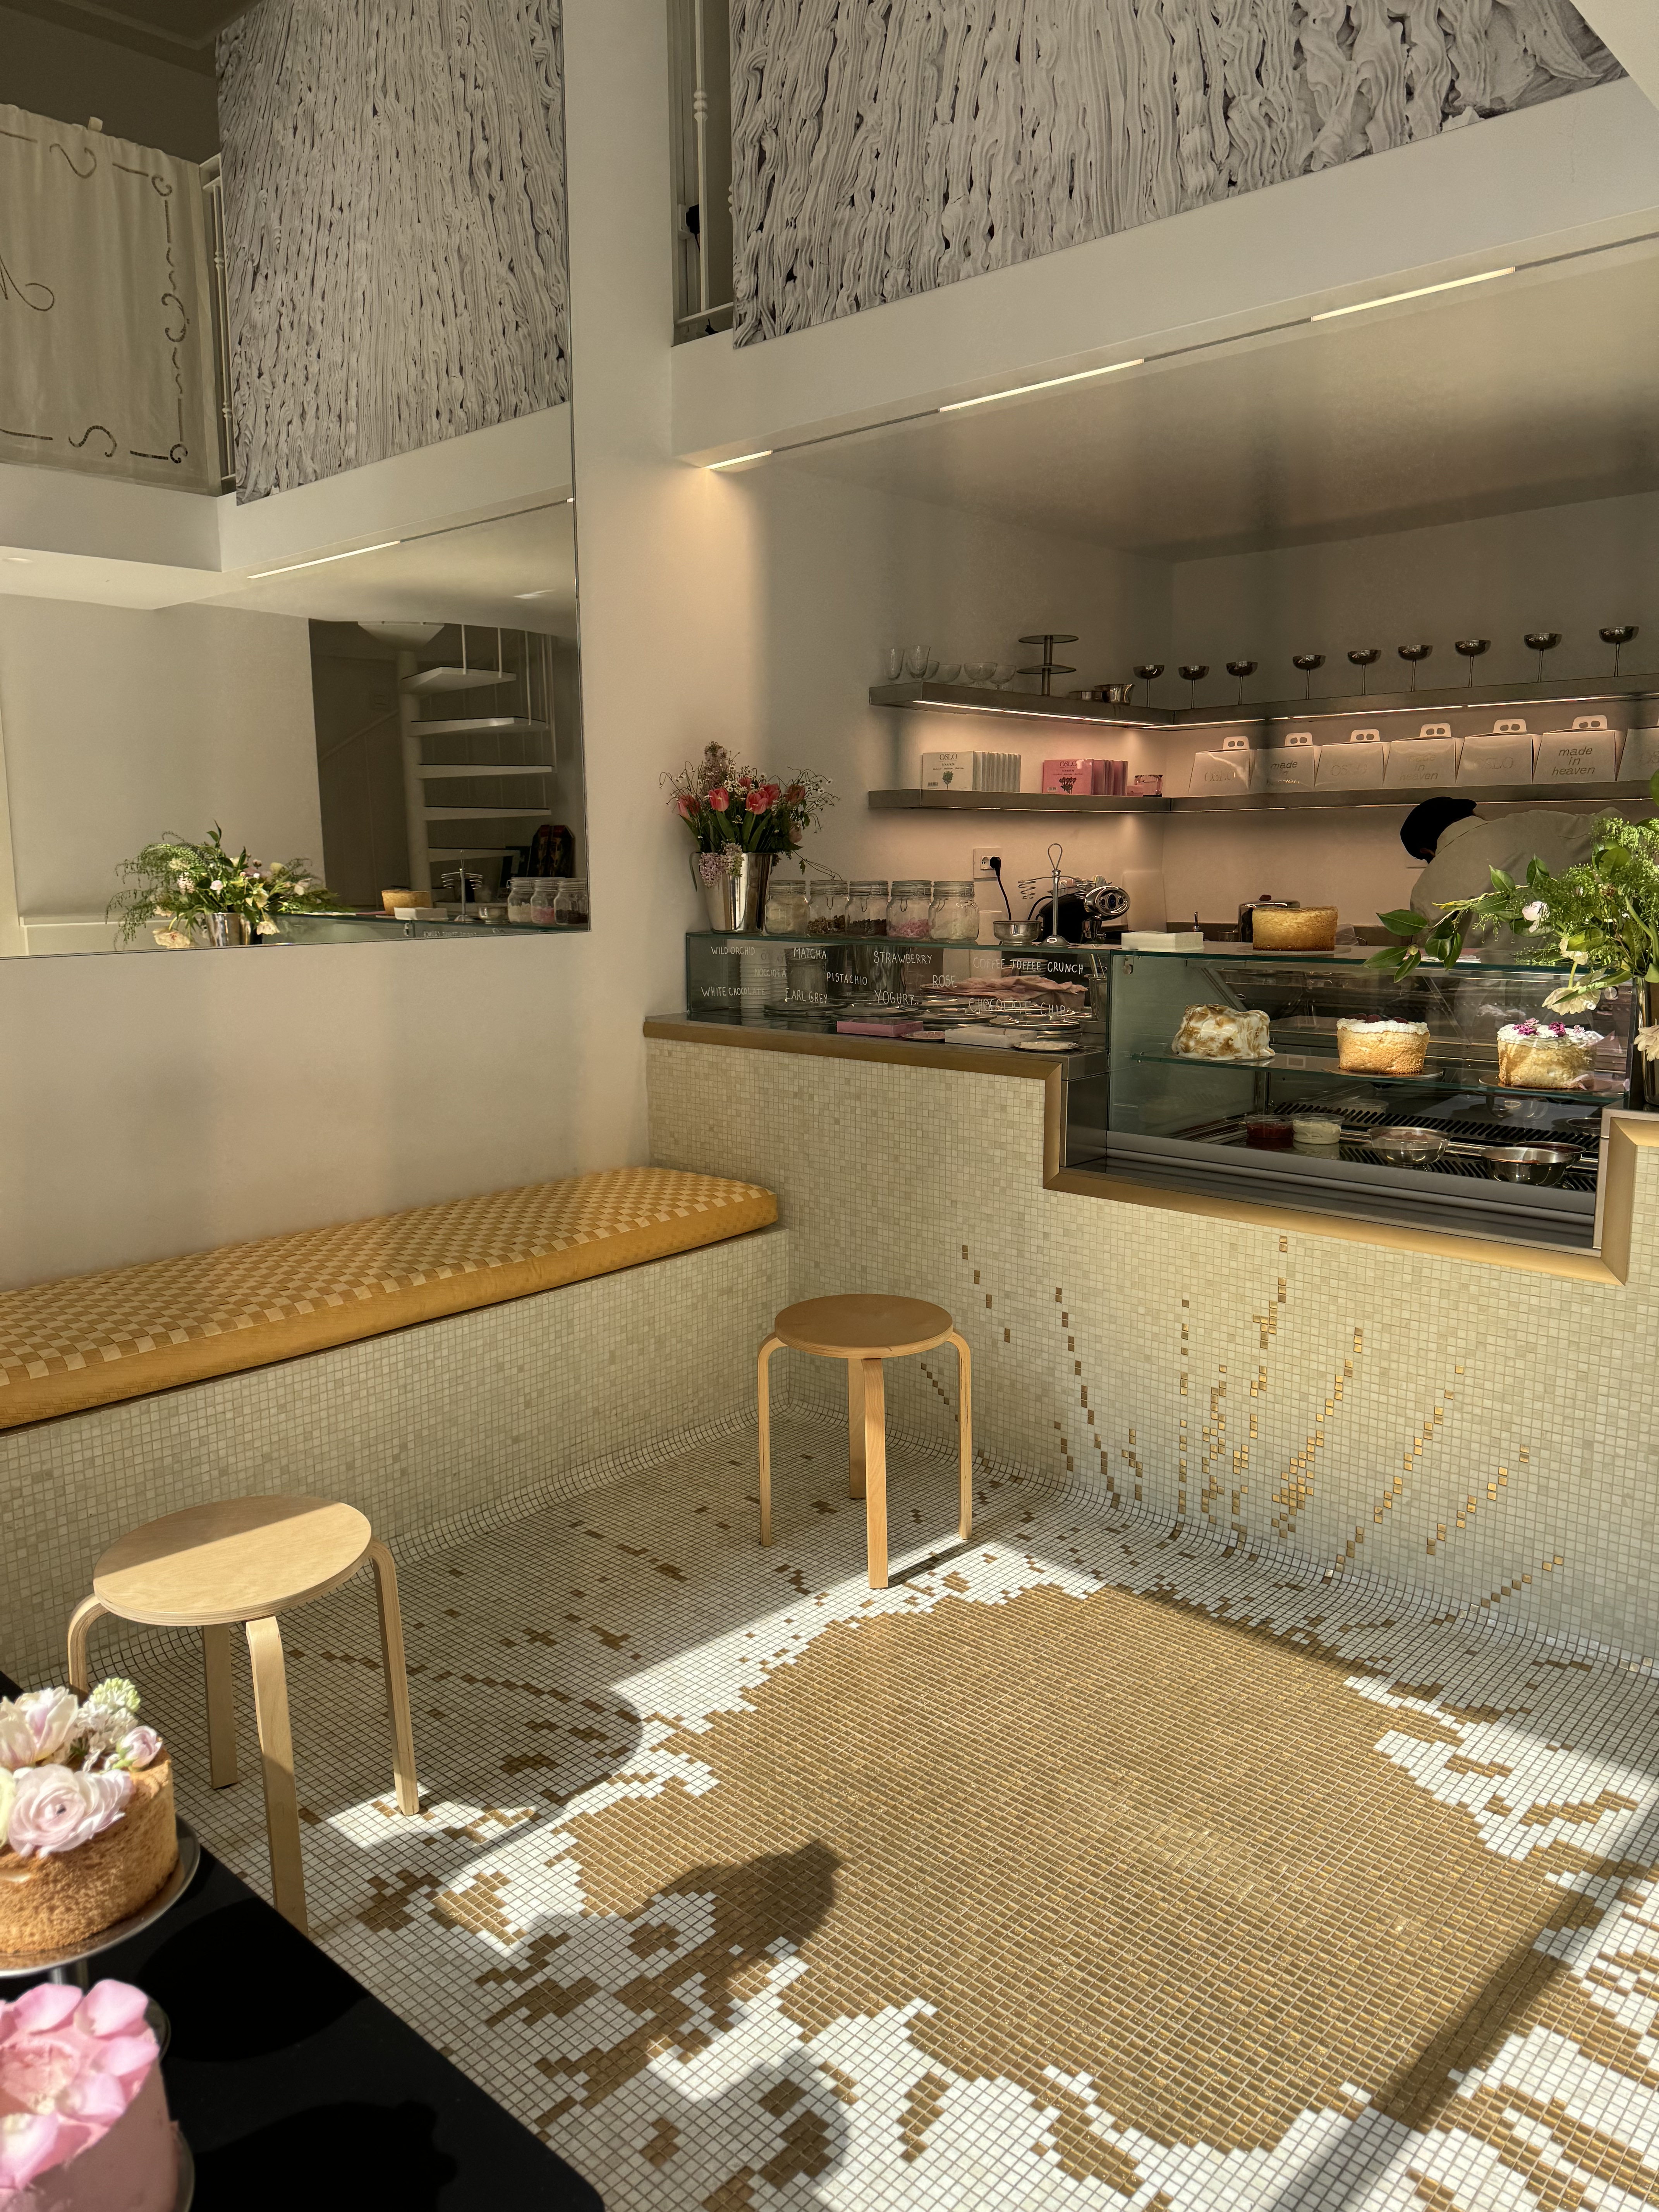 Milan cake shop interior with mosaic resembling spilt coffee